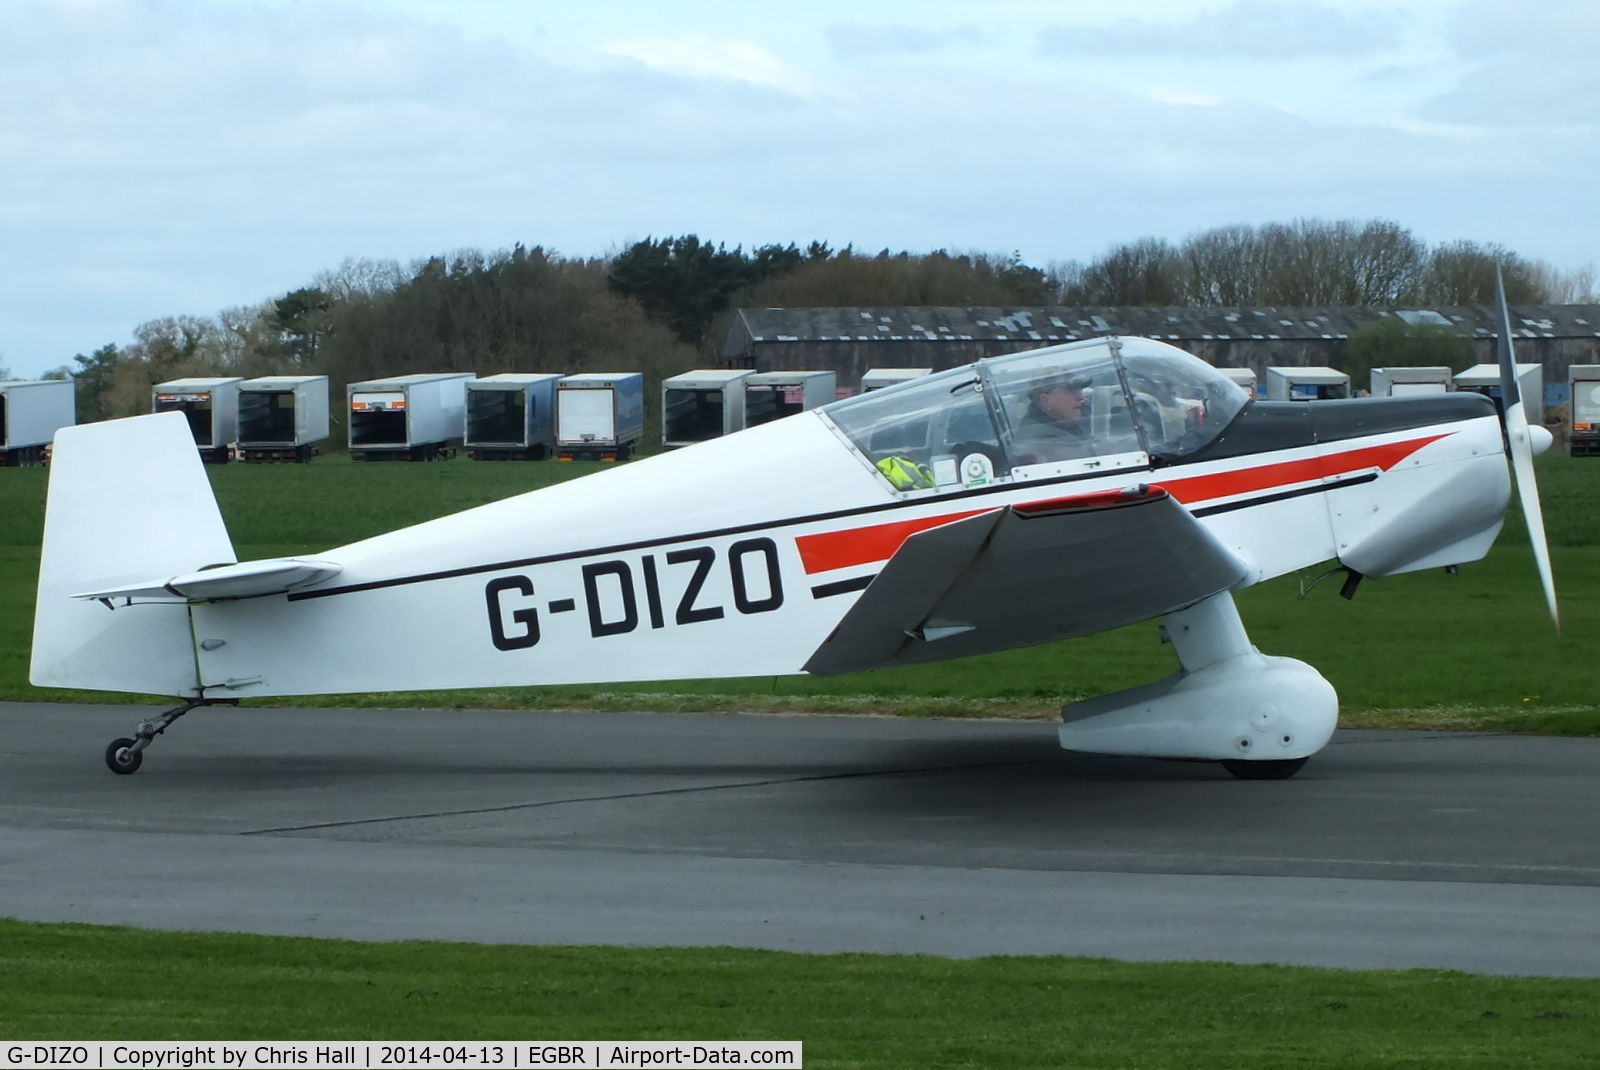 G-DIZO, 1965 Jodel D-120 Paris-Nice C/N 326, at Breighton's 'Early Bird' Fly-in 13/04/14